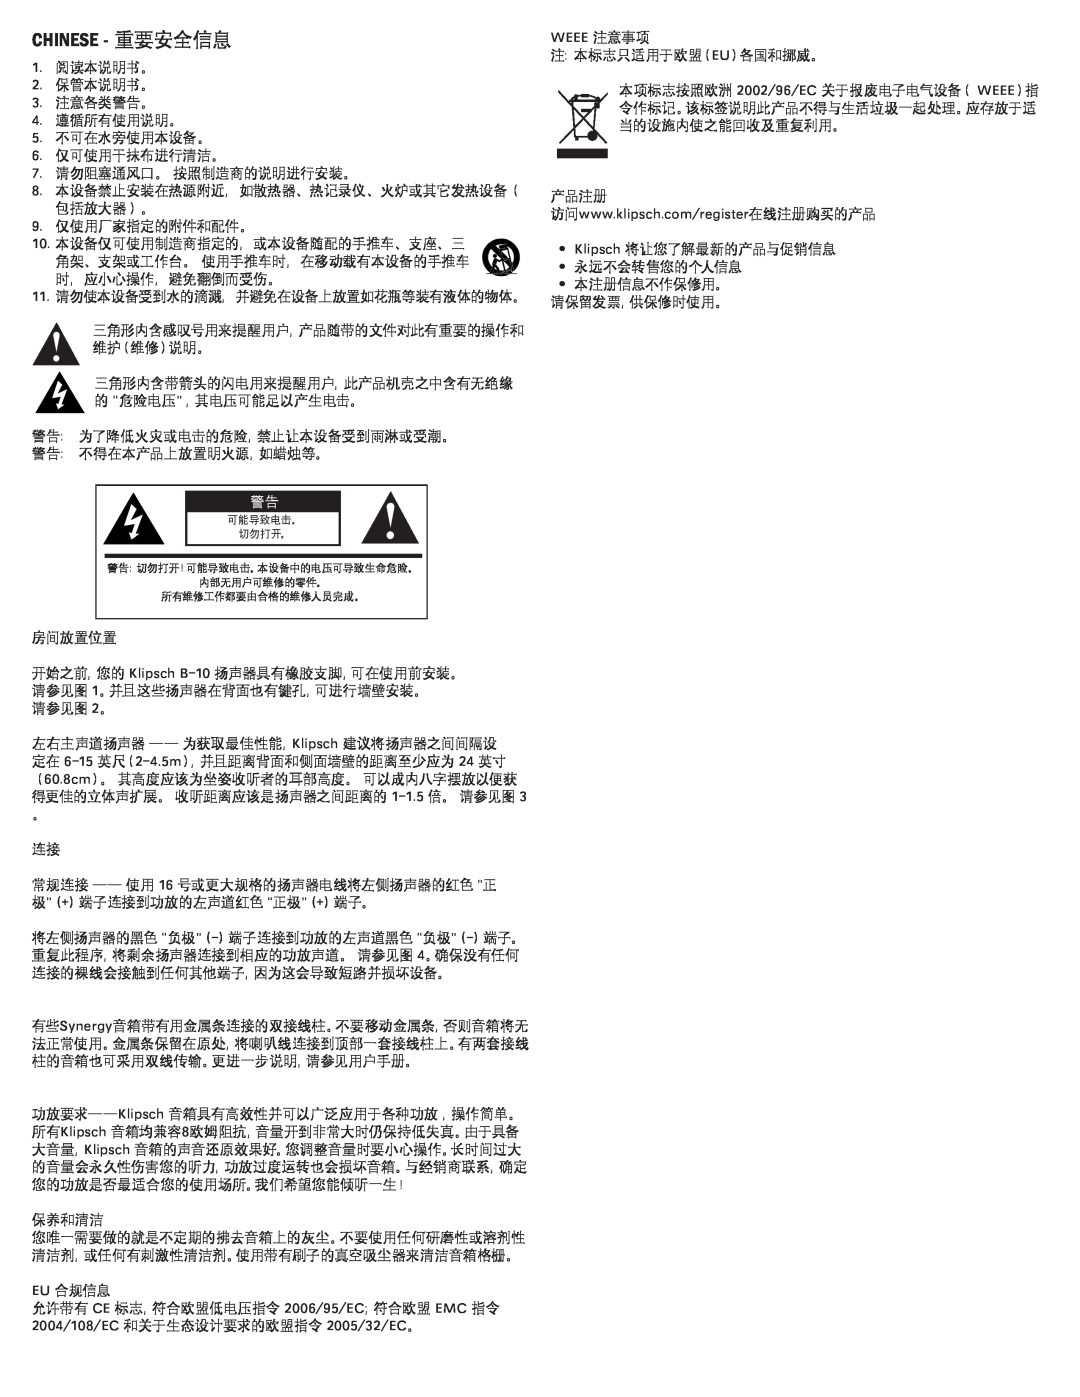 Klipsch B-10 owner manual Chinese - 重要安全信息, Weee 注意事项 